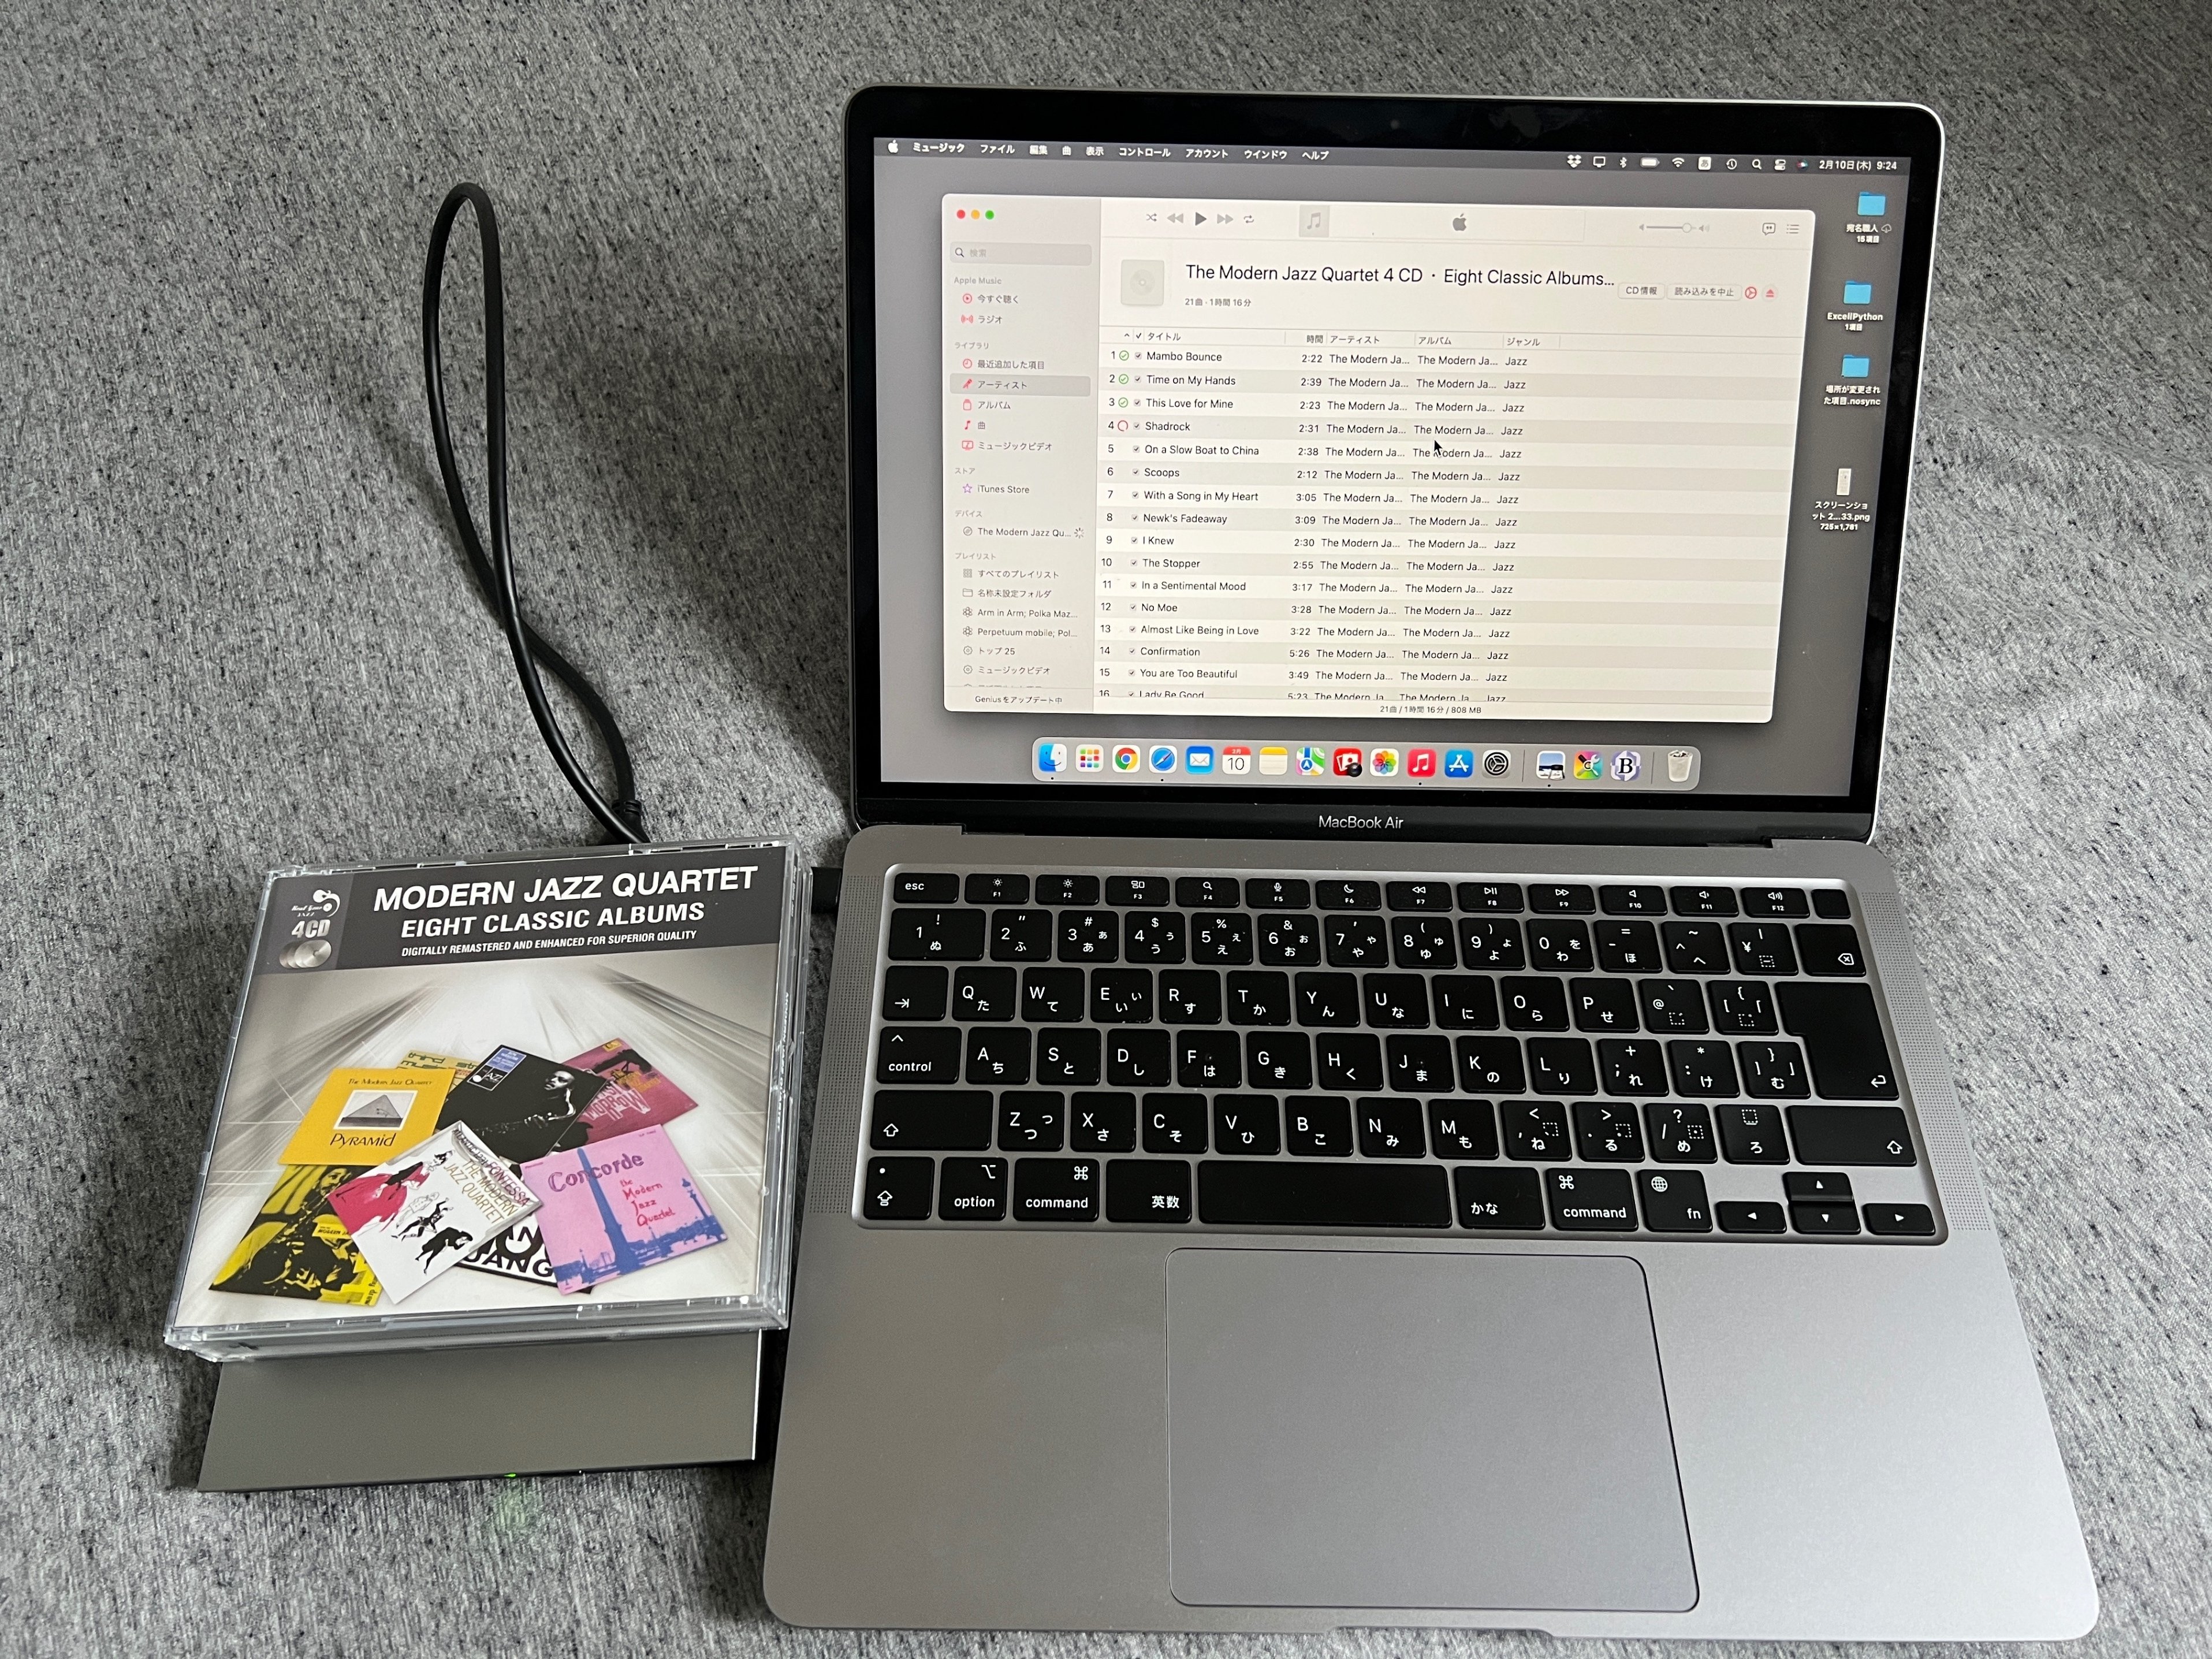 m1 Macbook Air マウス、ハブ、DVDdriveセット